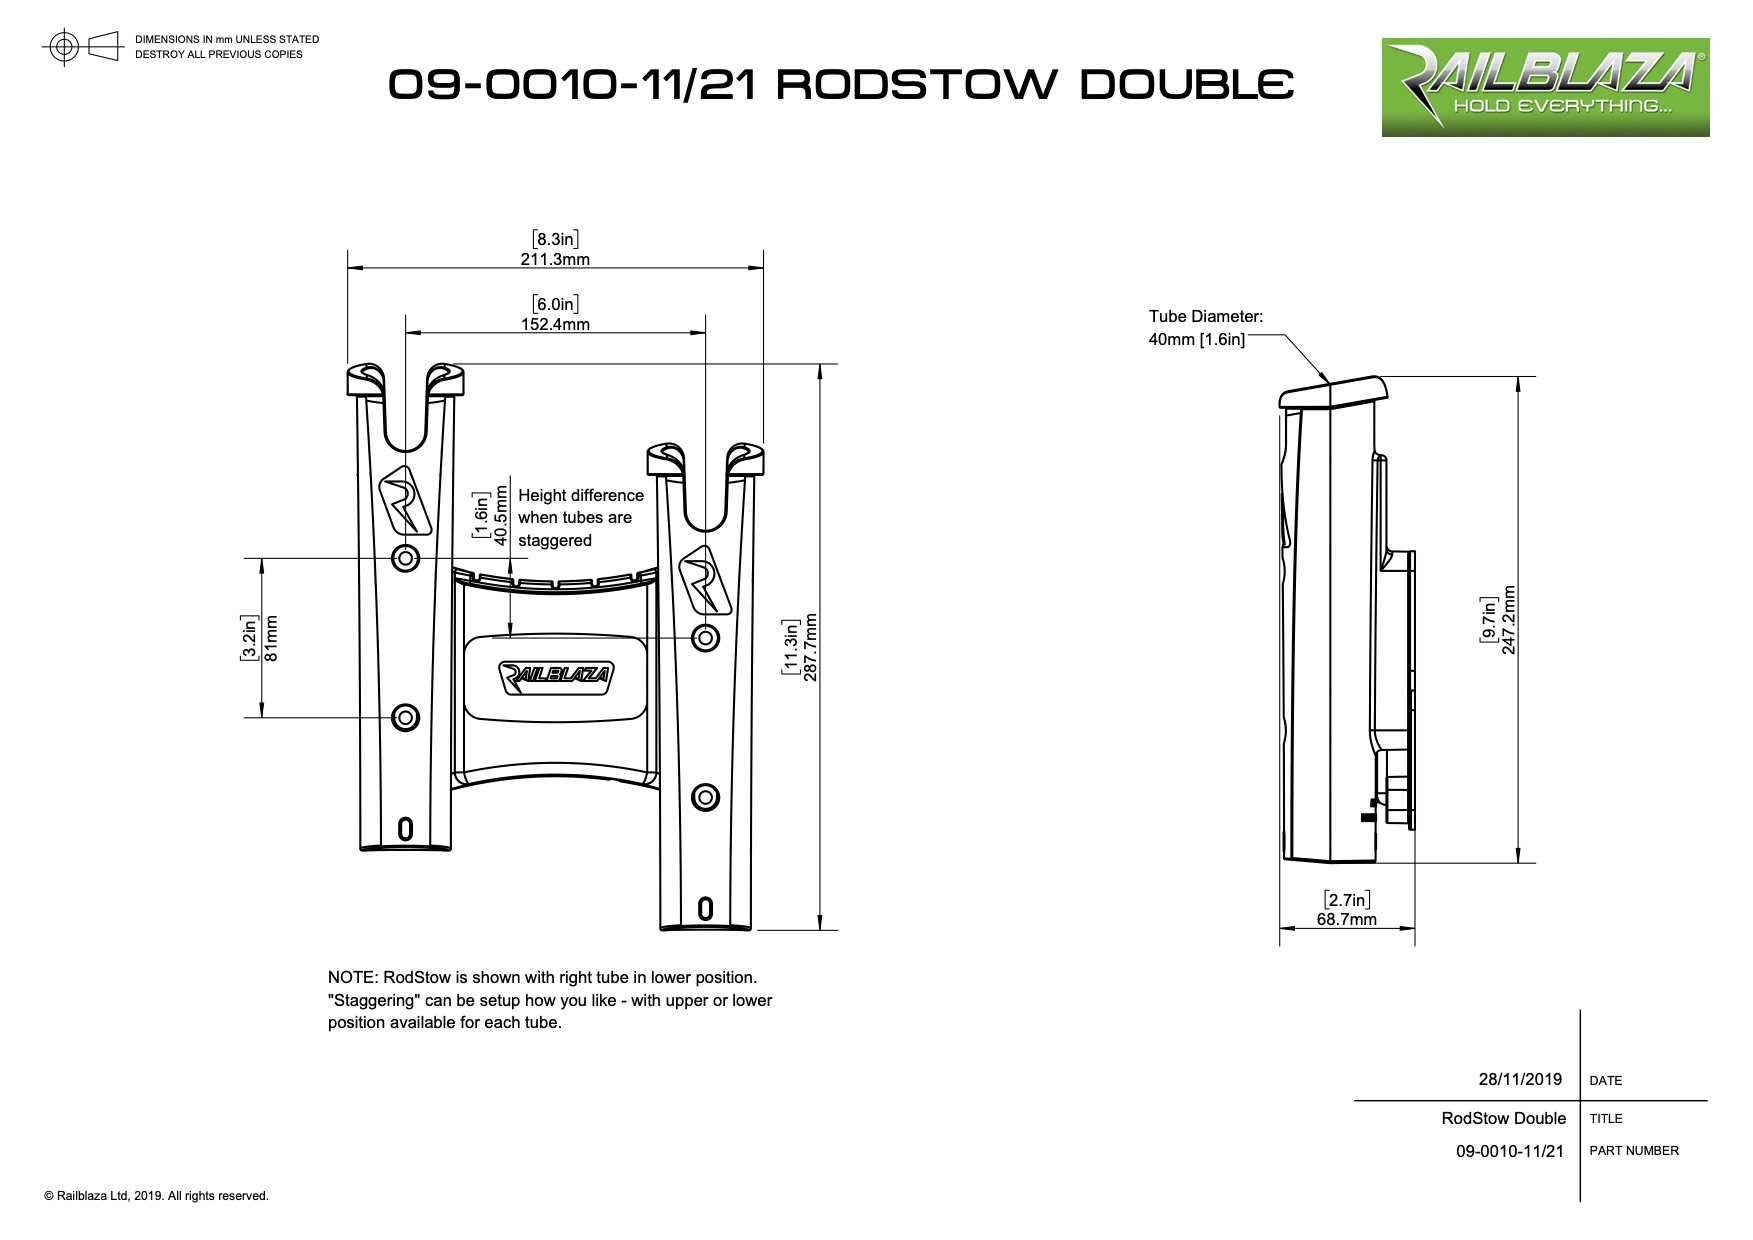 RodStow-Double-RAILBLAZA-RodStow-Double-Dimensions-2255_205808.jpg